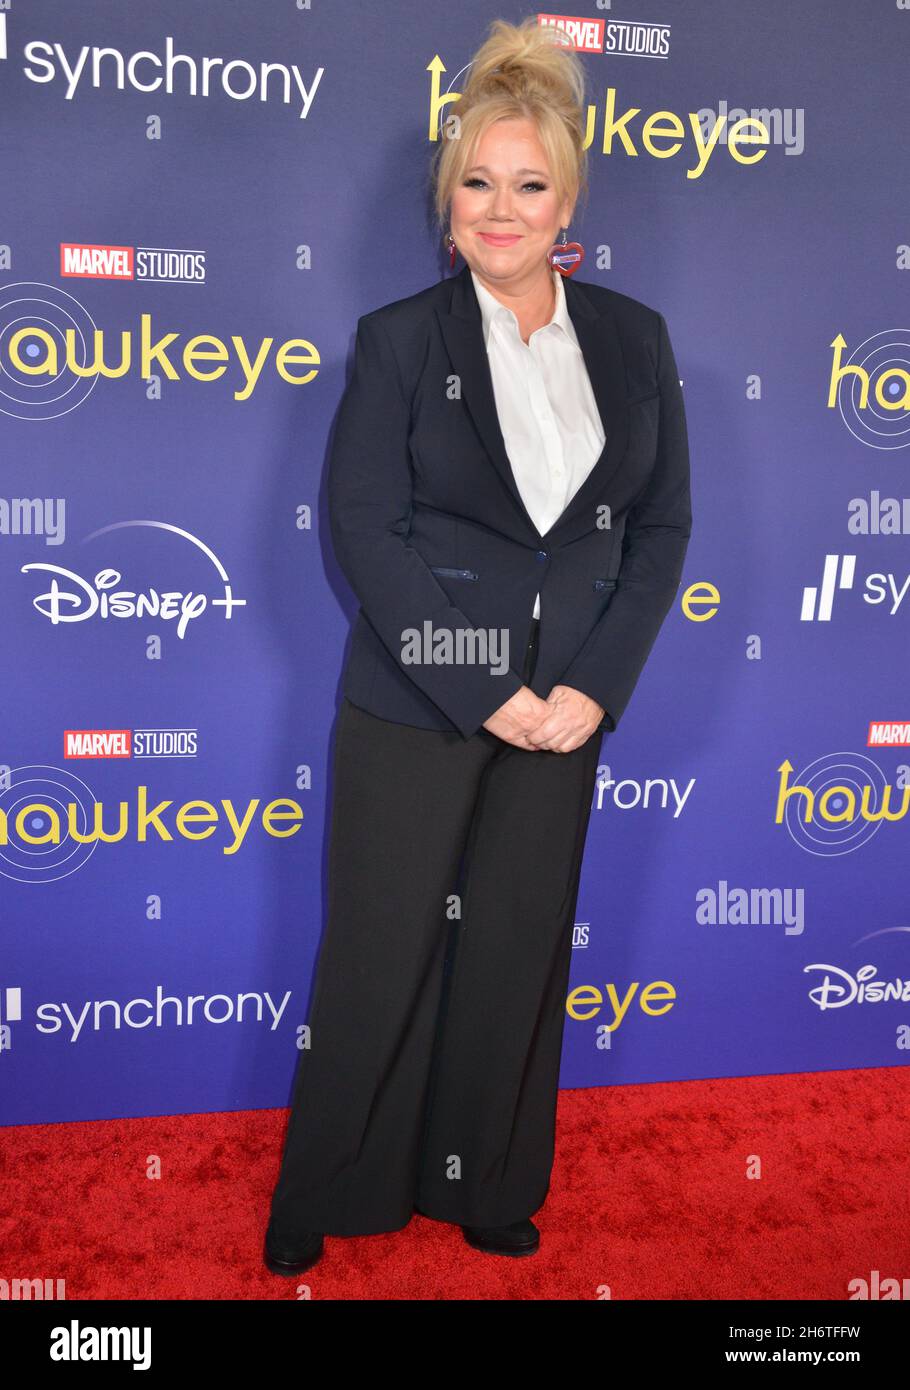 Los Angeles, USA. 18th Nov, 2021. Caroline Rhea attends Marvel Studios' Los Angeles Premiere of 'Hawkeye' at El Capitan Theatre on November 17, 2021 in Los Angeles, California. Credit: Tsuni/USA/Alamy Live News Stock Photo